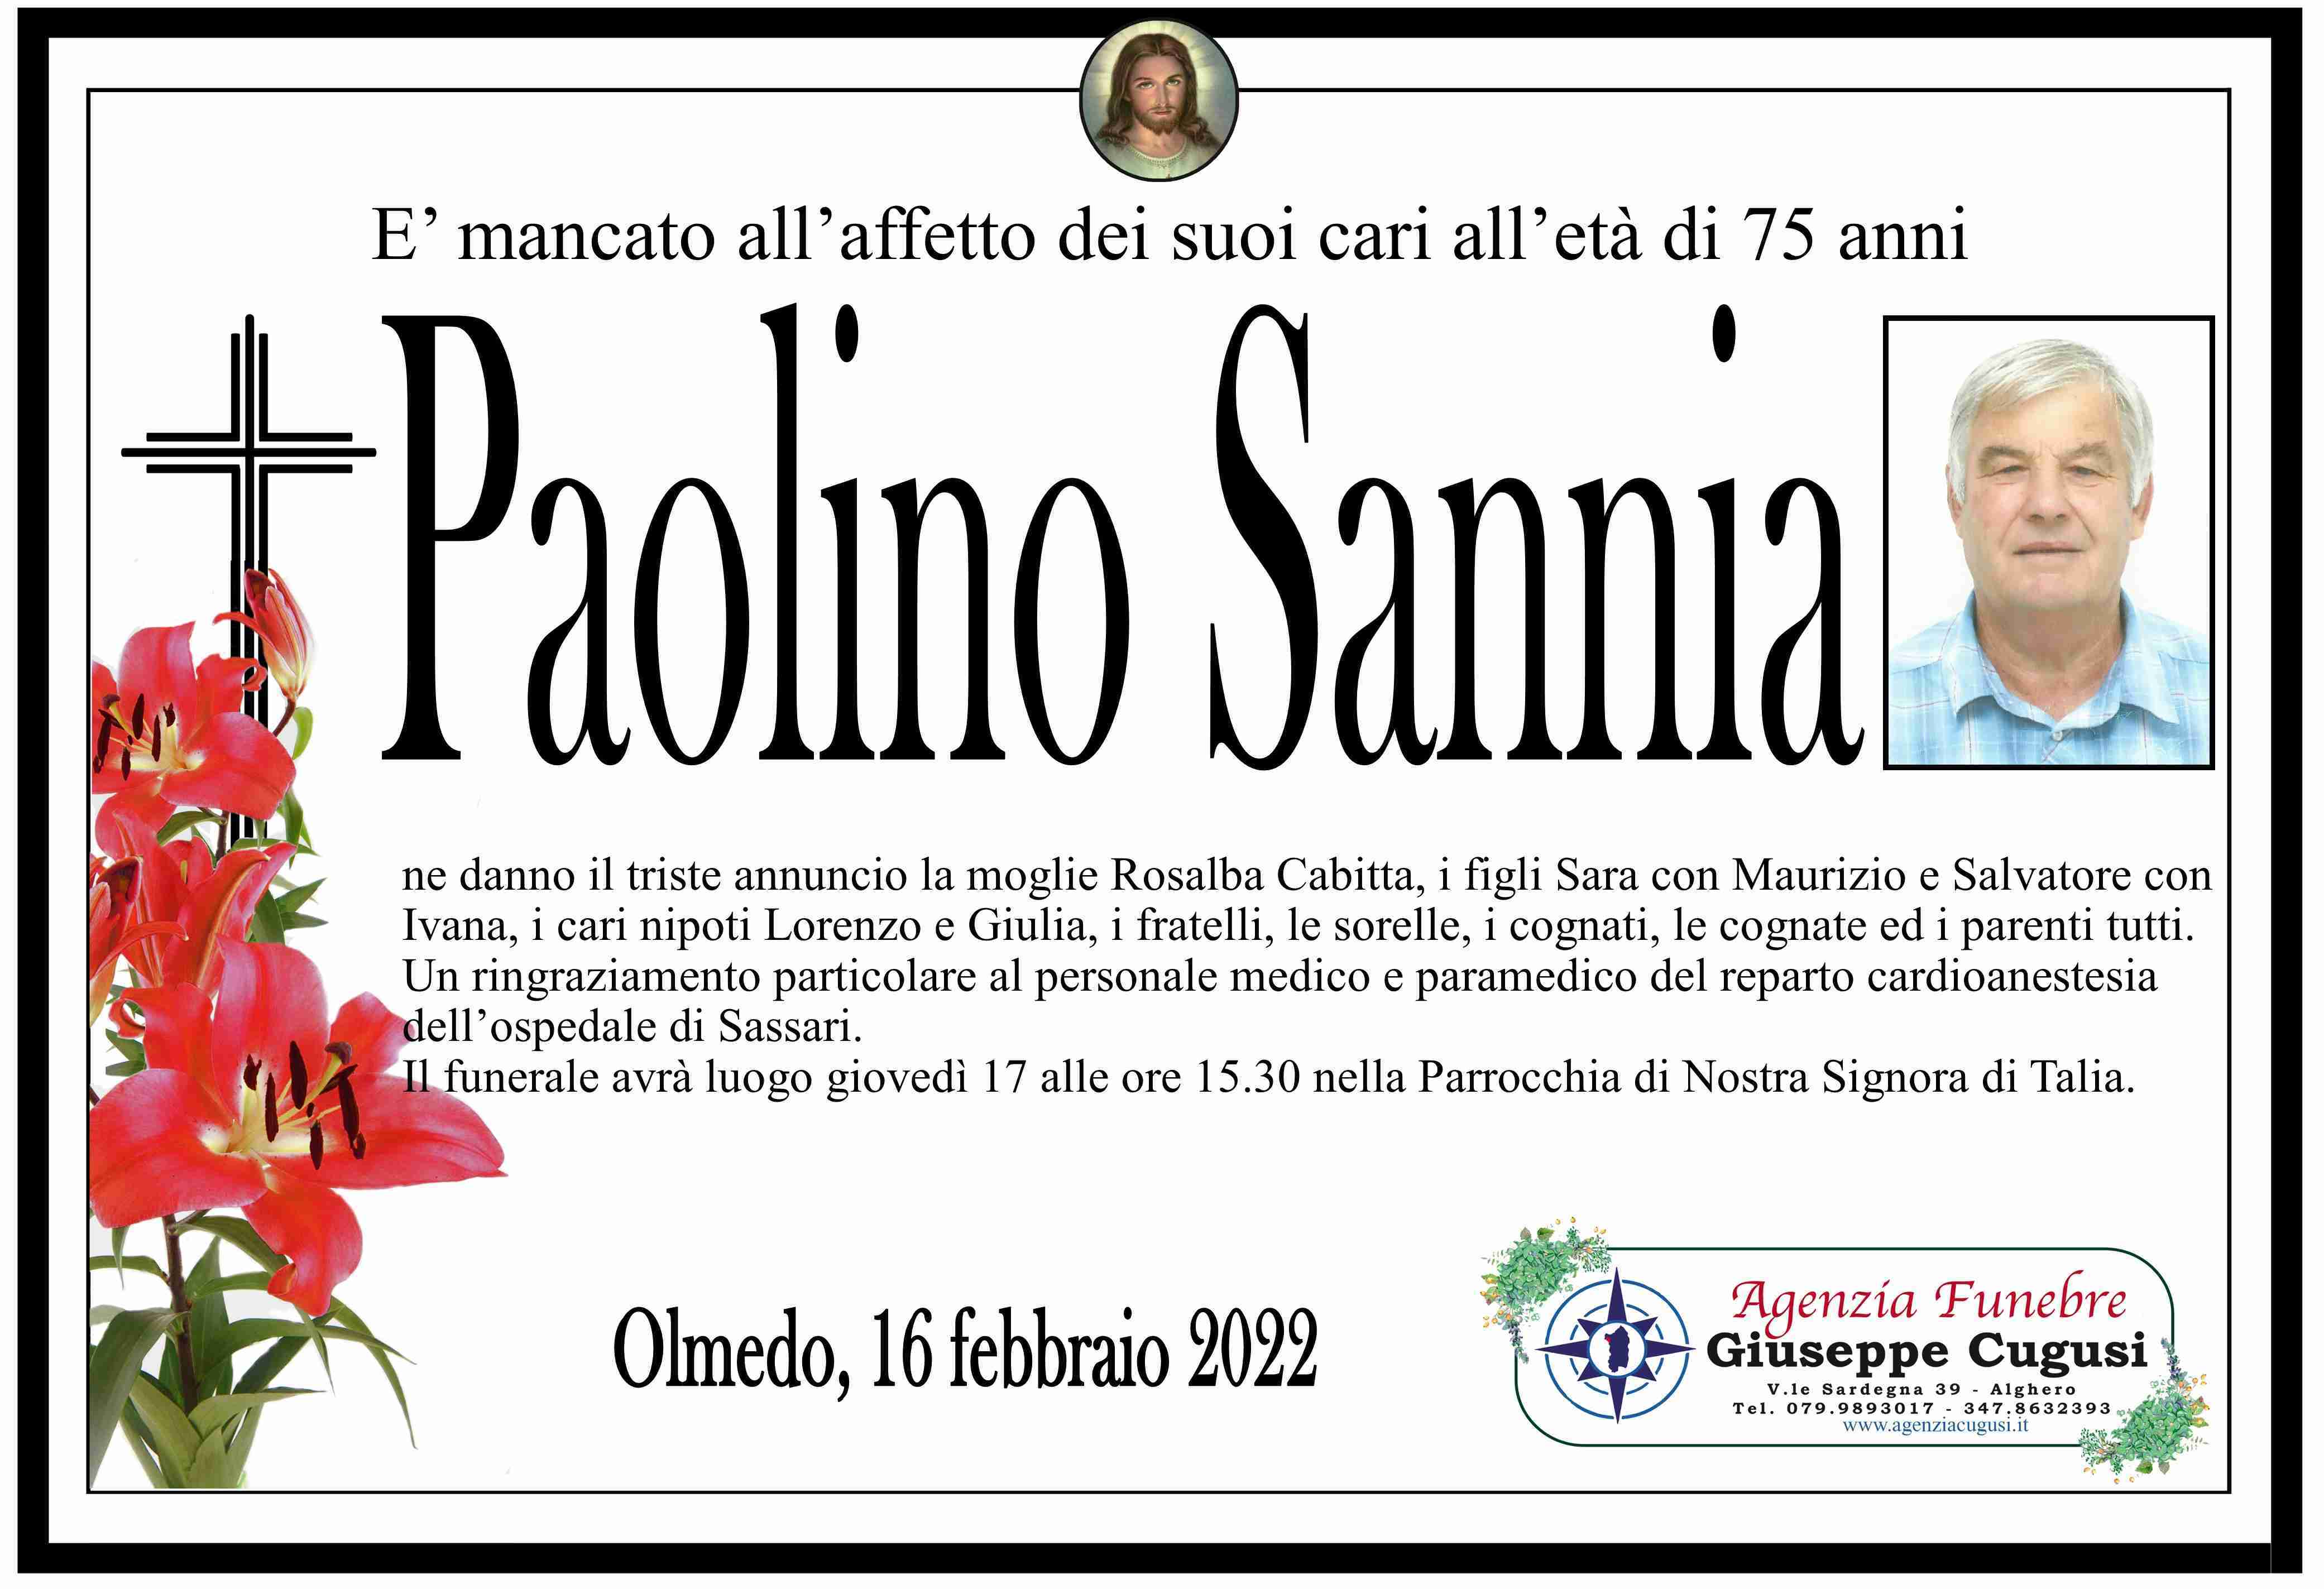 Paolino Sannia